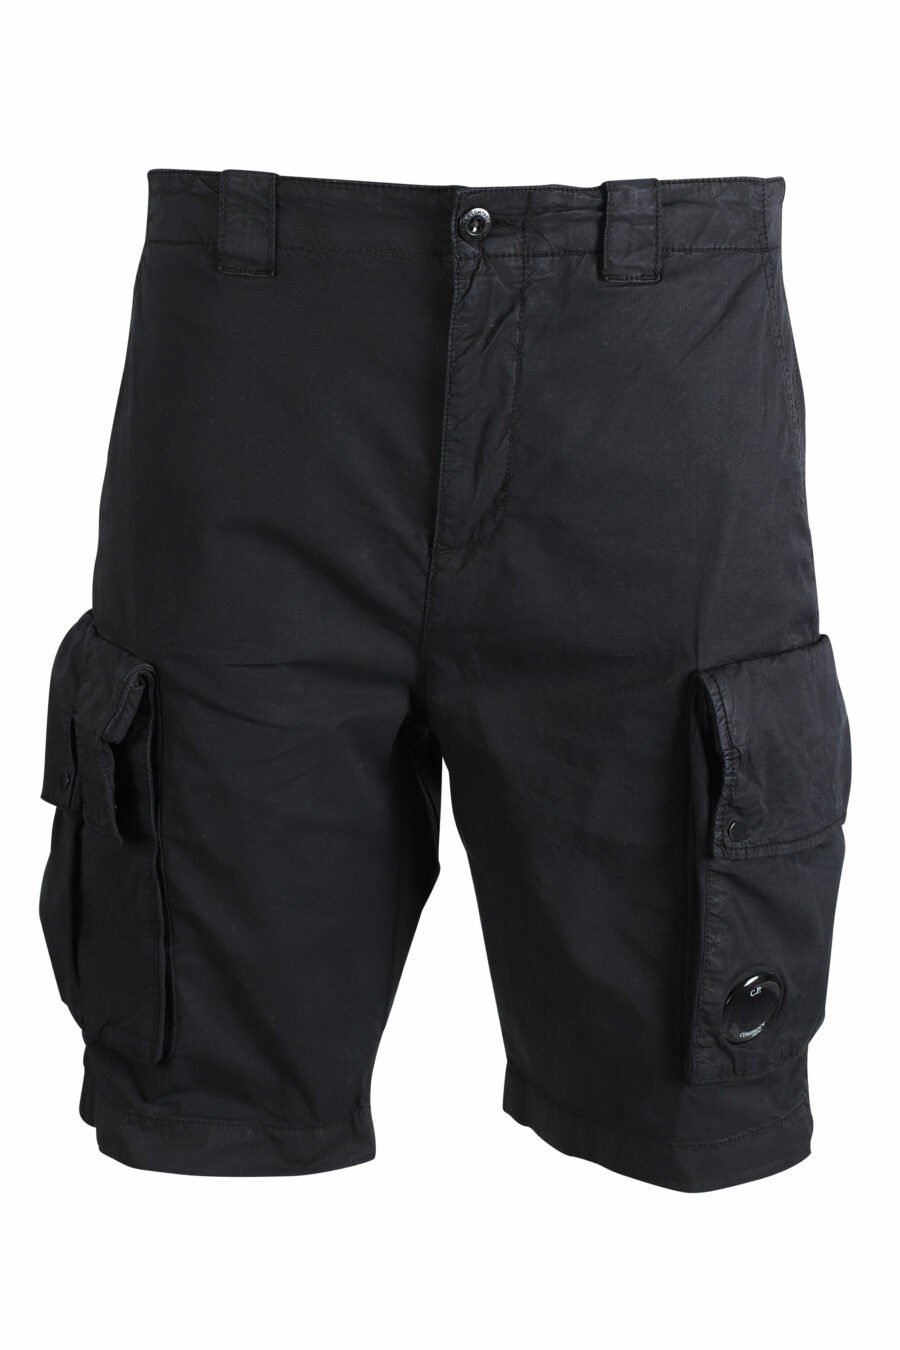 Pantalón corto negro con bolsillos laterales y minilogo circular - IMG 9478